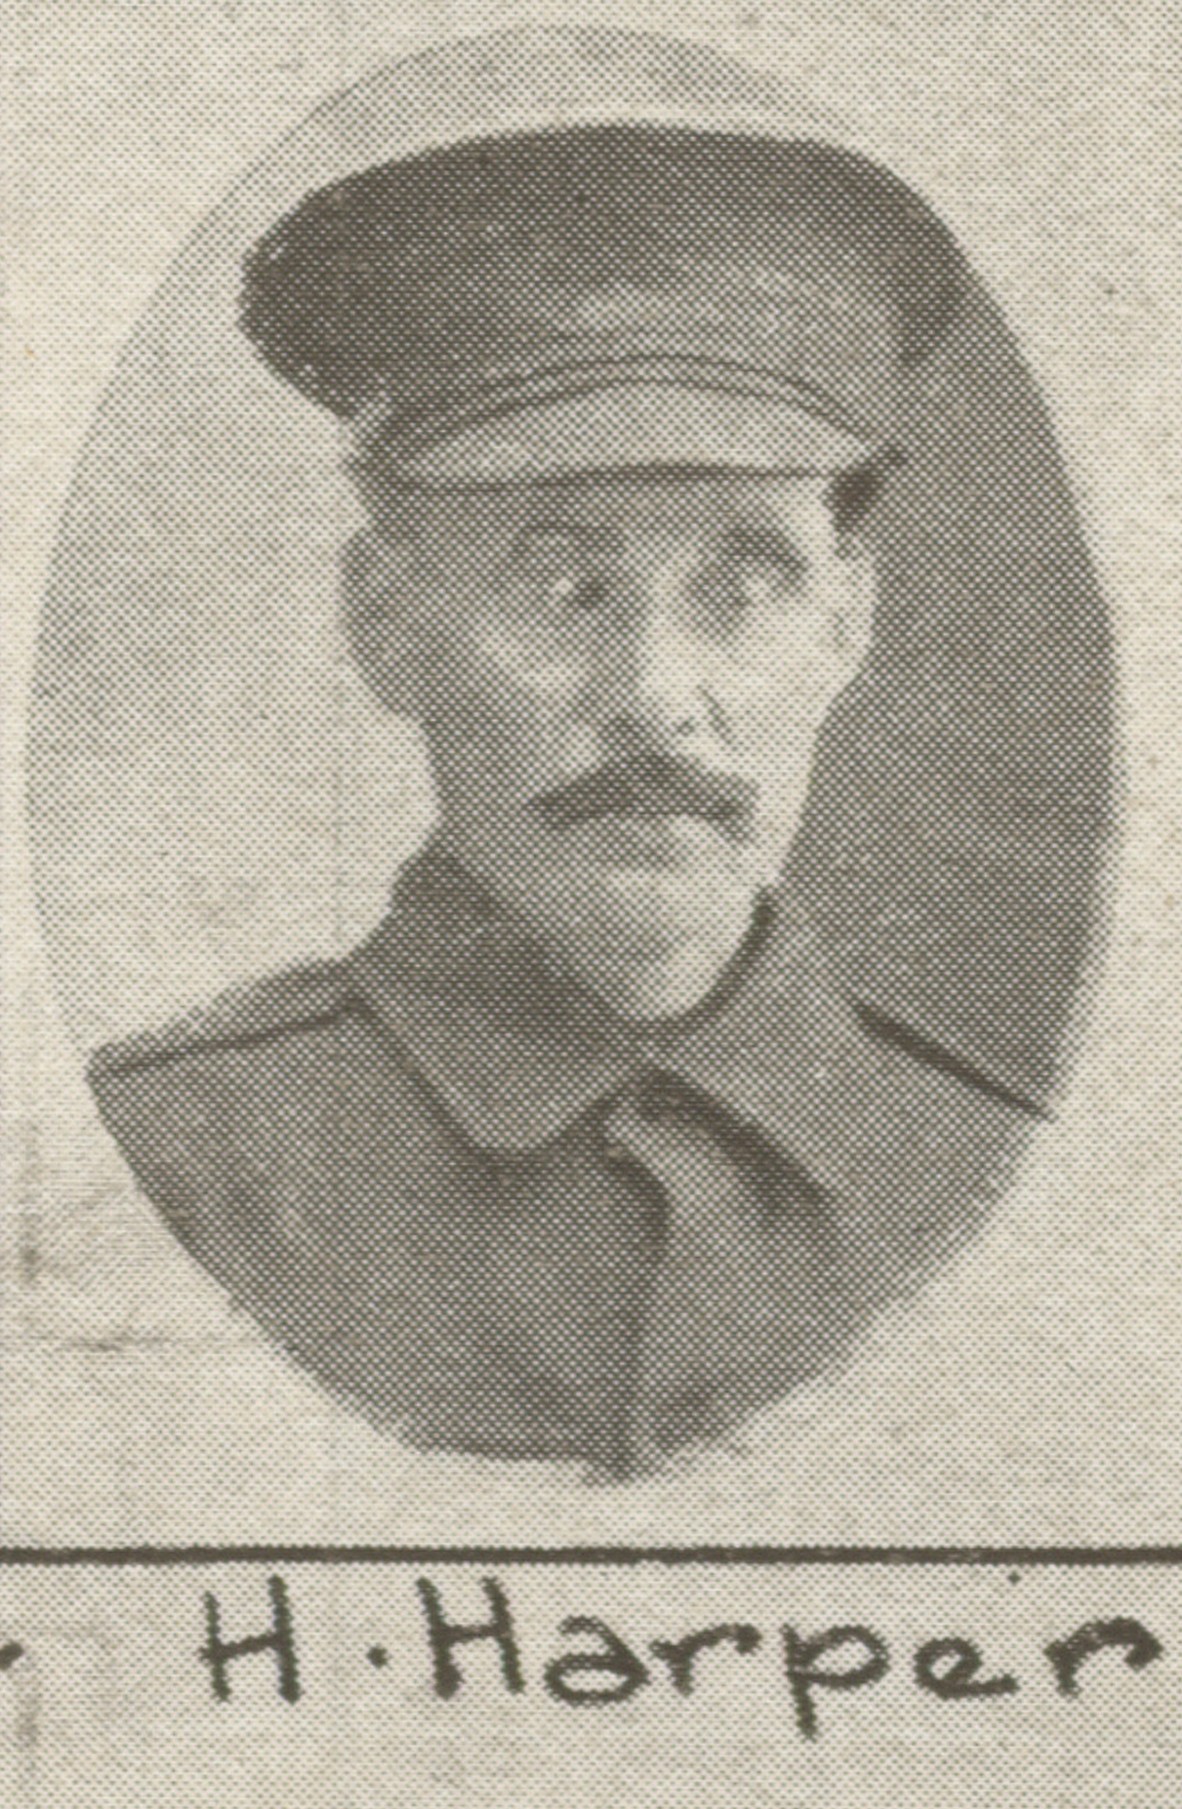 H. Harper one of the soldiers photographed in The Queenslander Pictorial supplement to The Queenslander 1917.